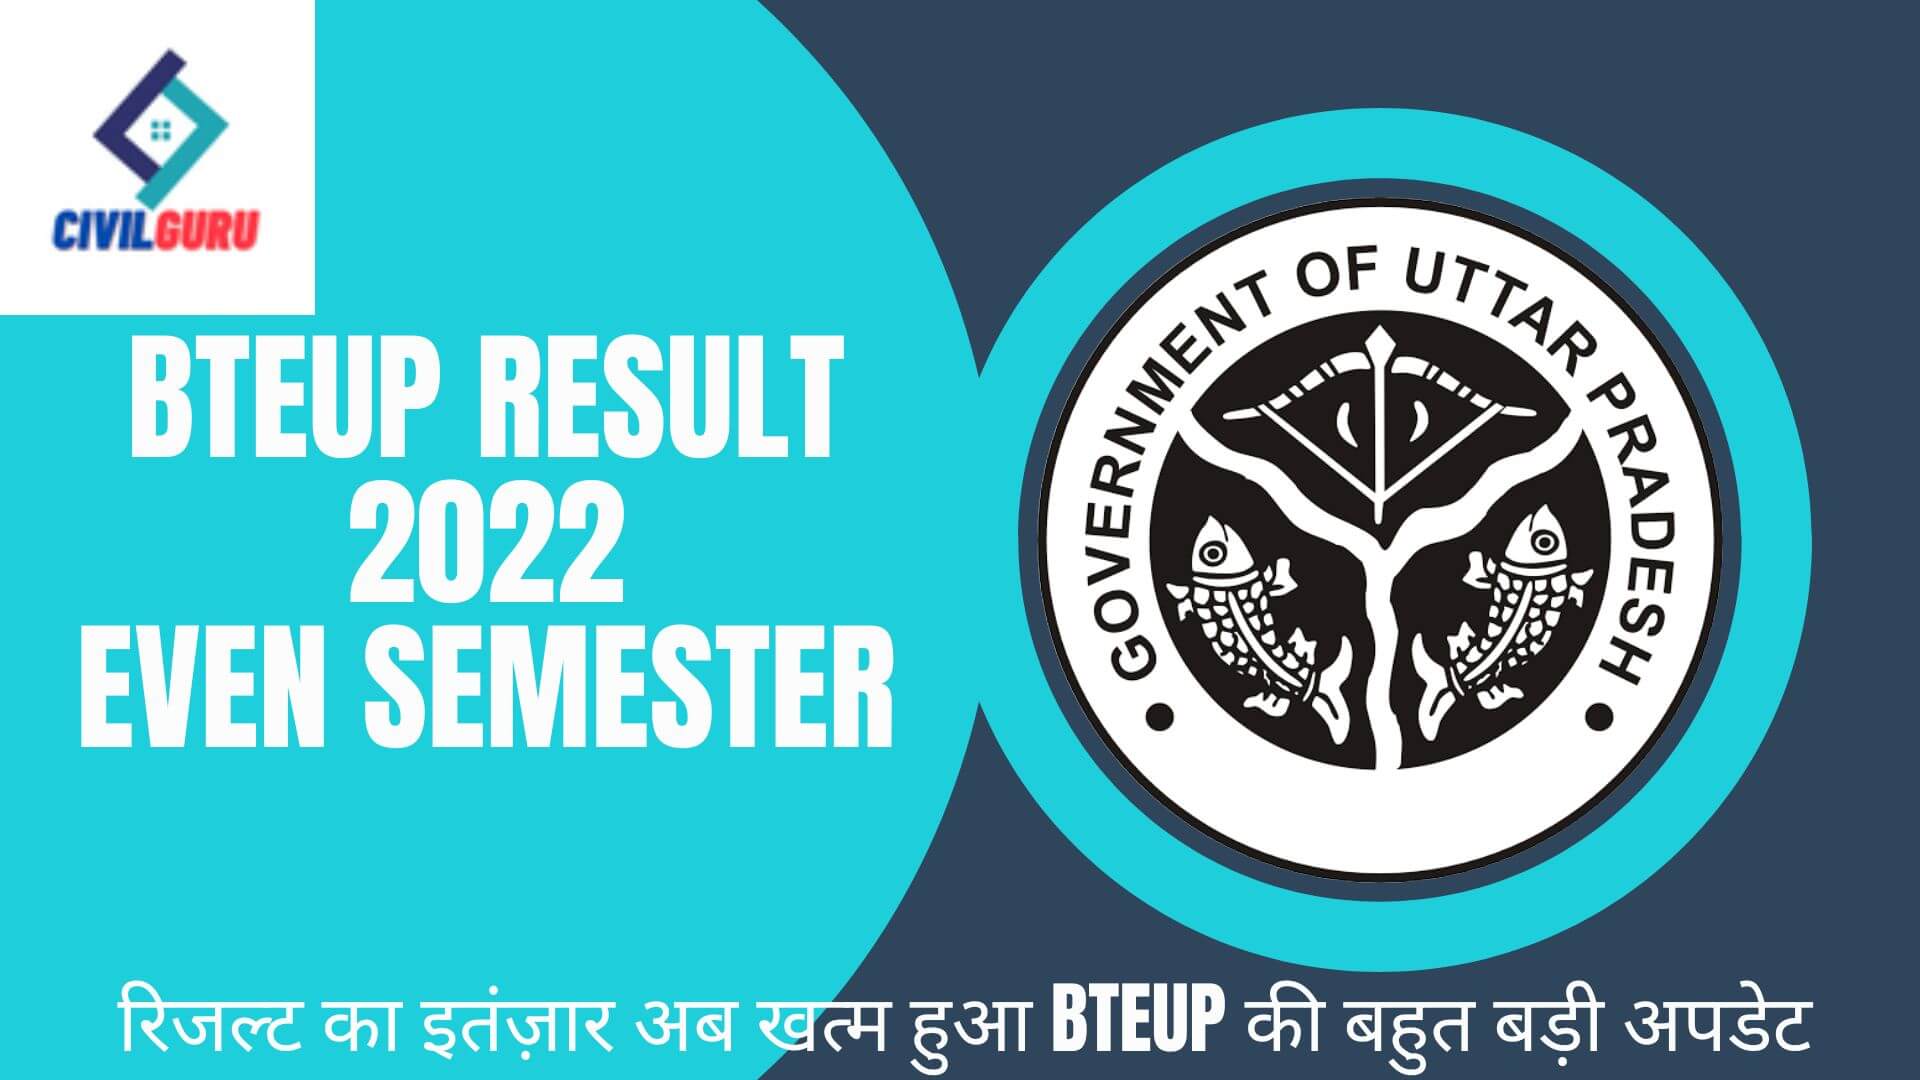 Bteup result 2022 even semester